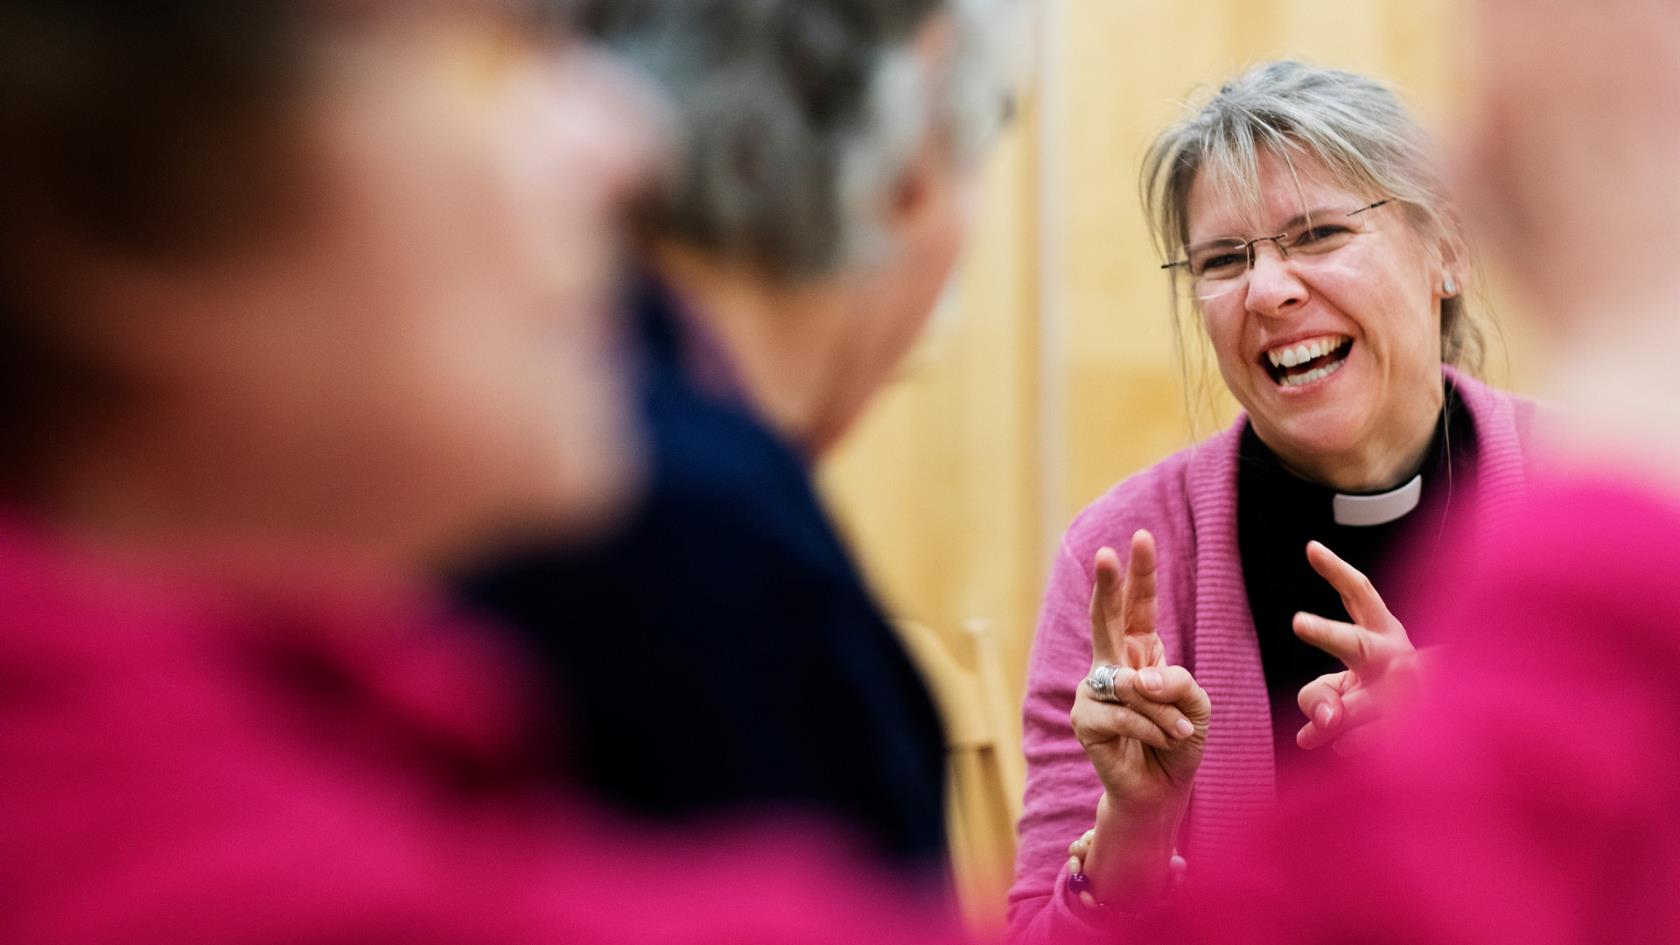 Teckenspråkspräst Kristina Åkerman talar teckenspråk